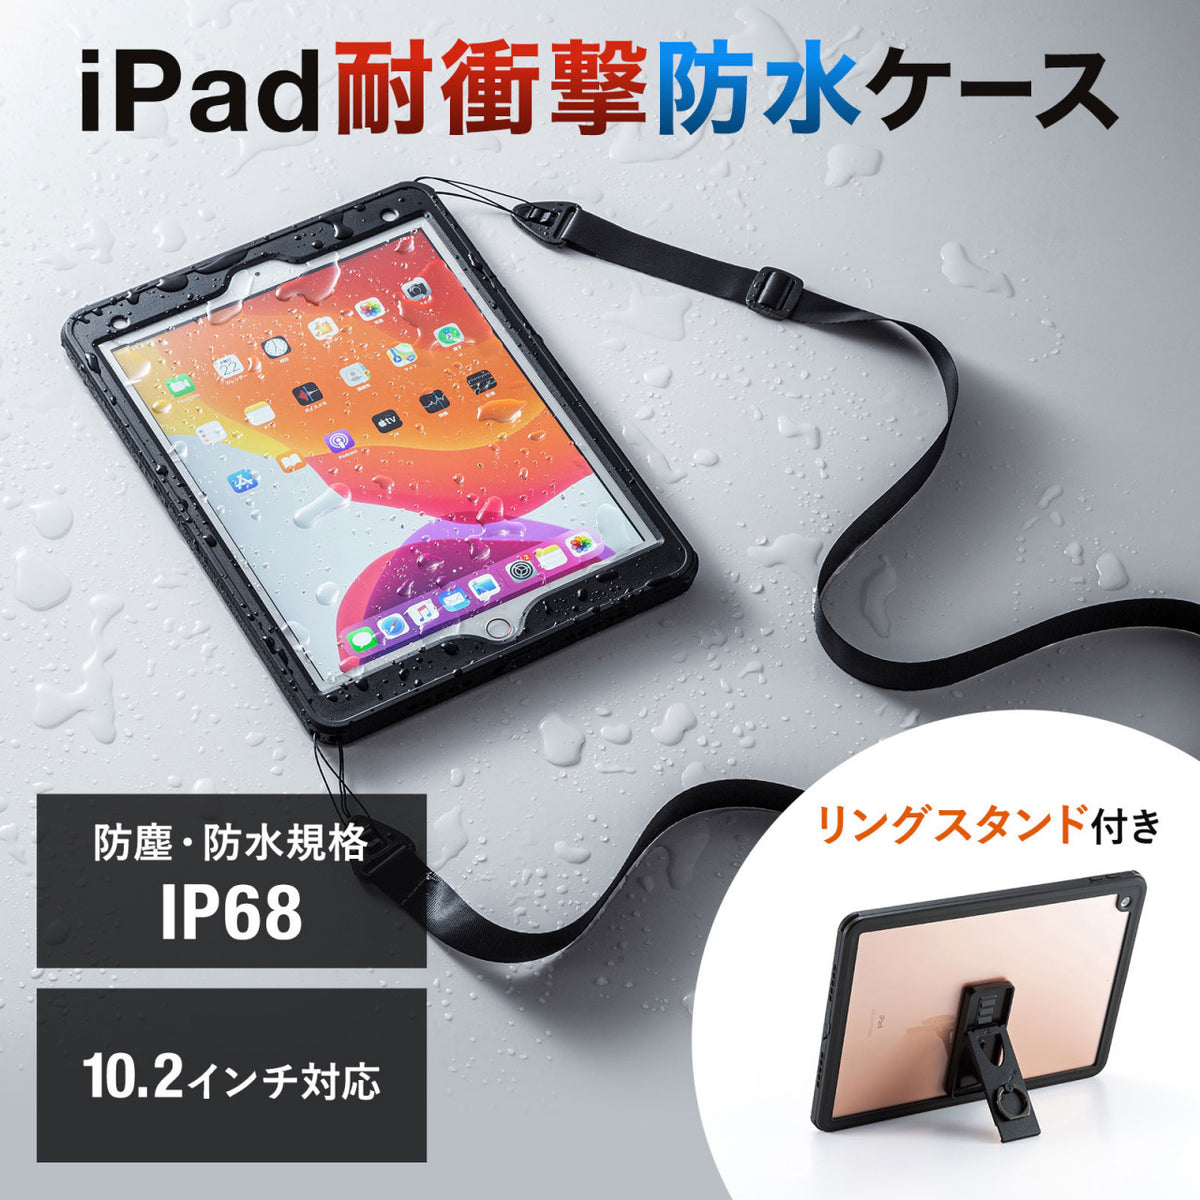 PC/タブレットApple ipad mini 64GB wi-fiモデル 防水ケース付 ...